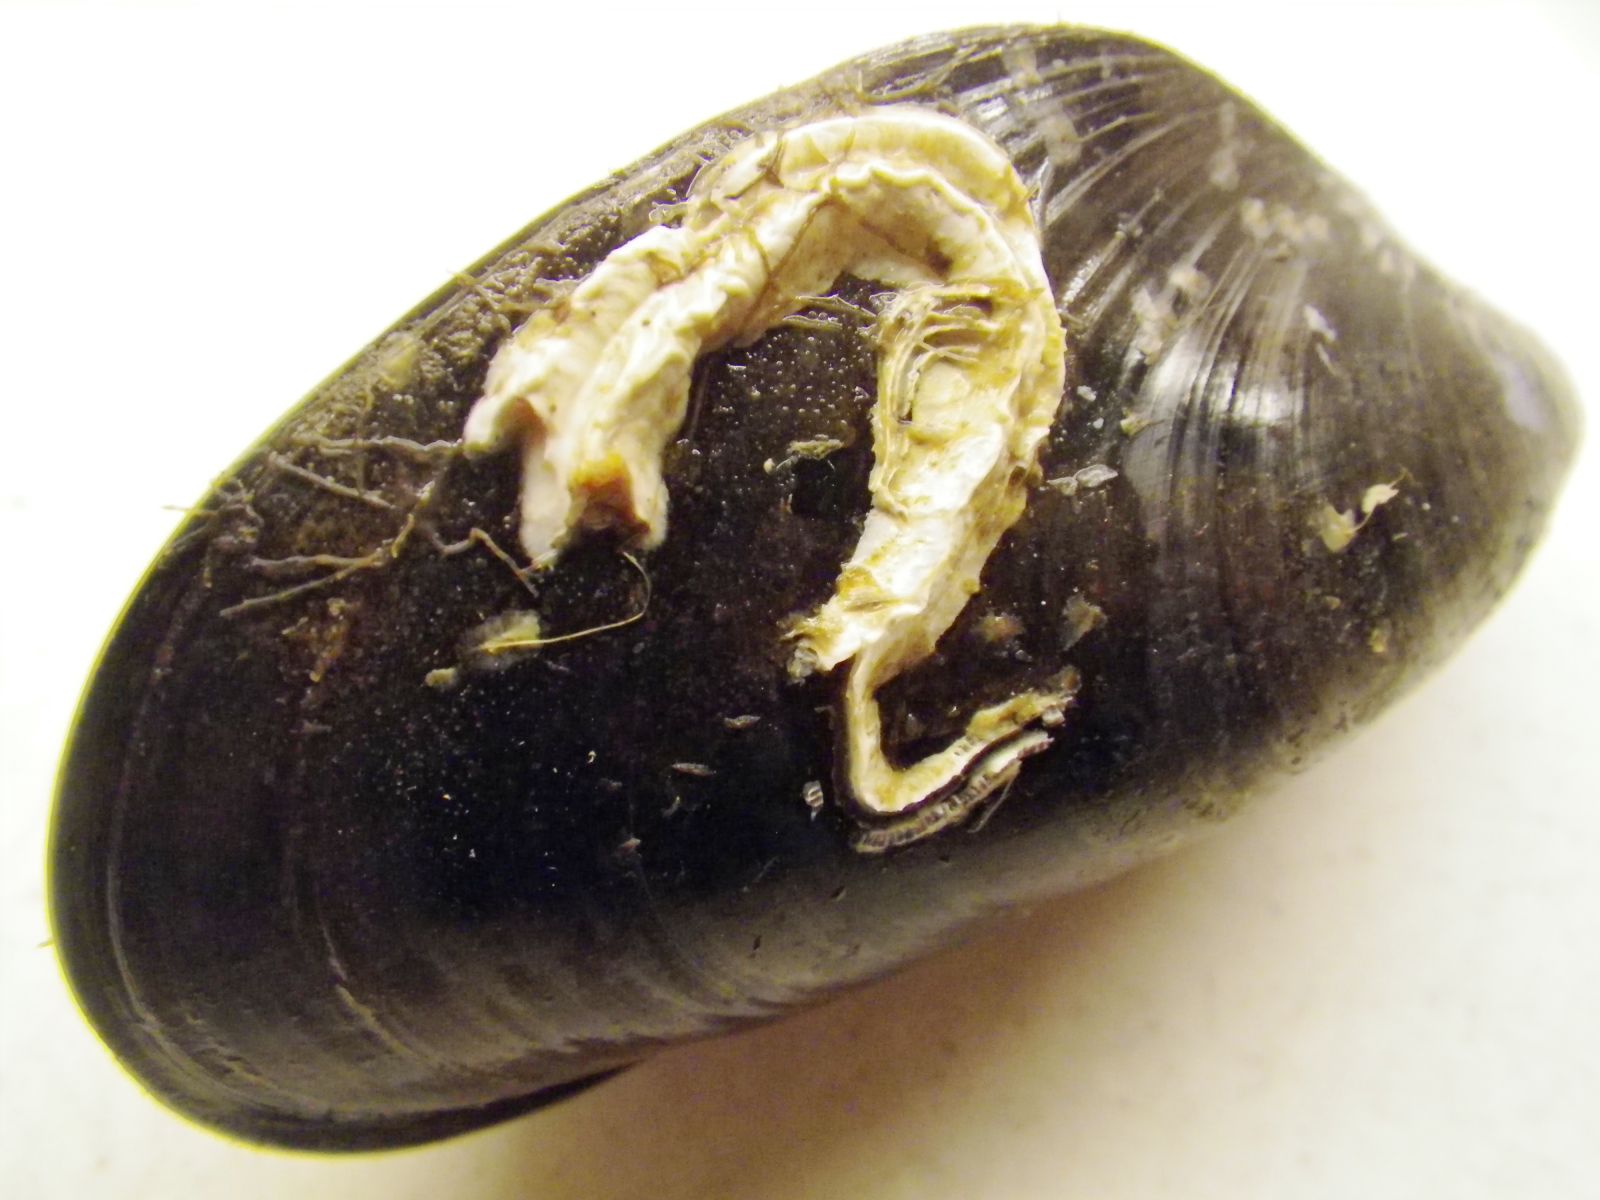 Sinistral spiral tubeworm (Pomatoceros triqueter) on a Blue mussel. Photo: Mikael Olsson 